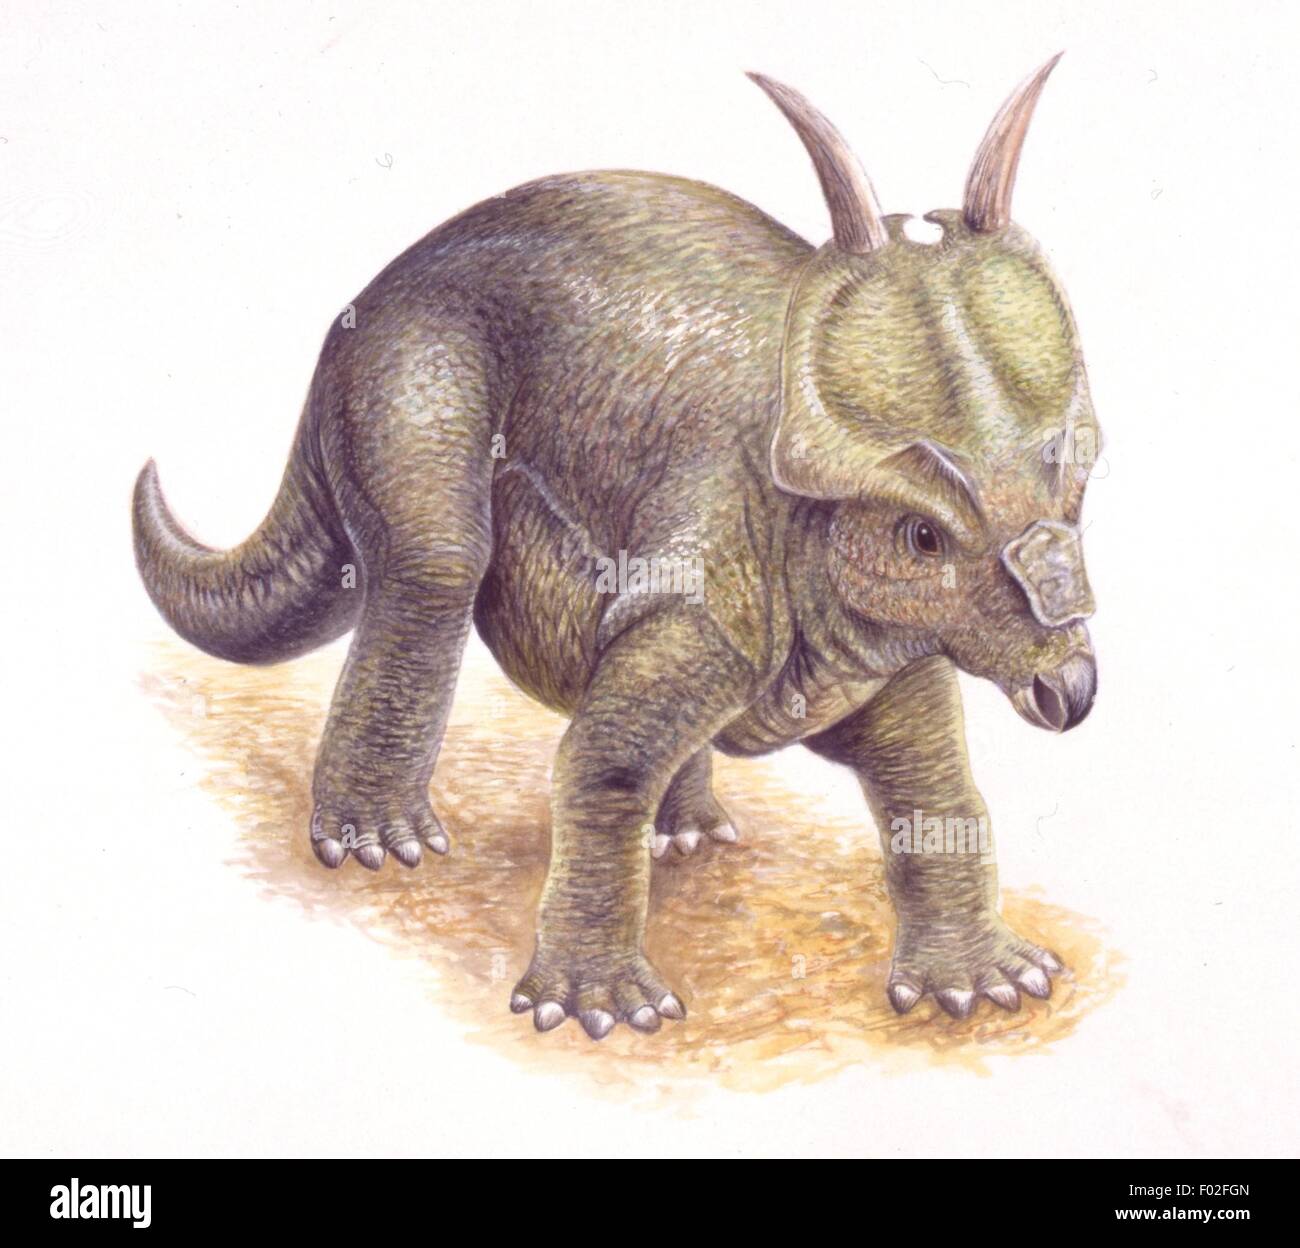 Palaeozoology - Cretaceous period - Dinosaurs - Achelousaurus - Art work by Steve Roberts Stock Photo